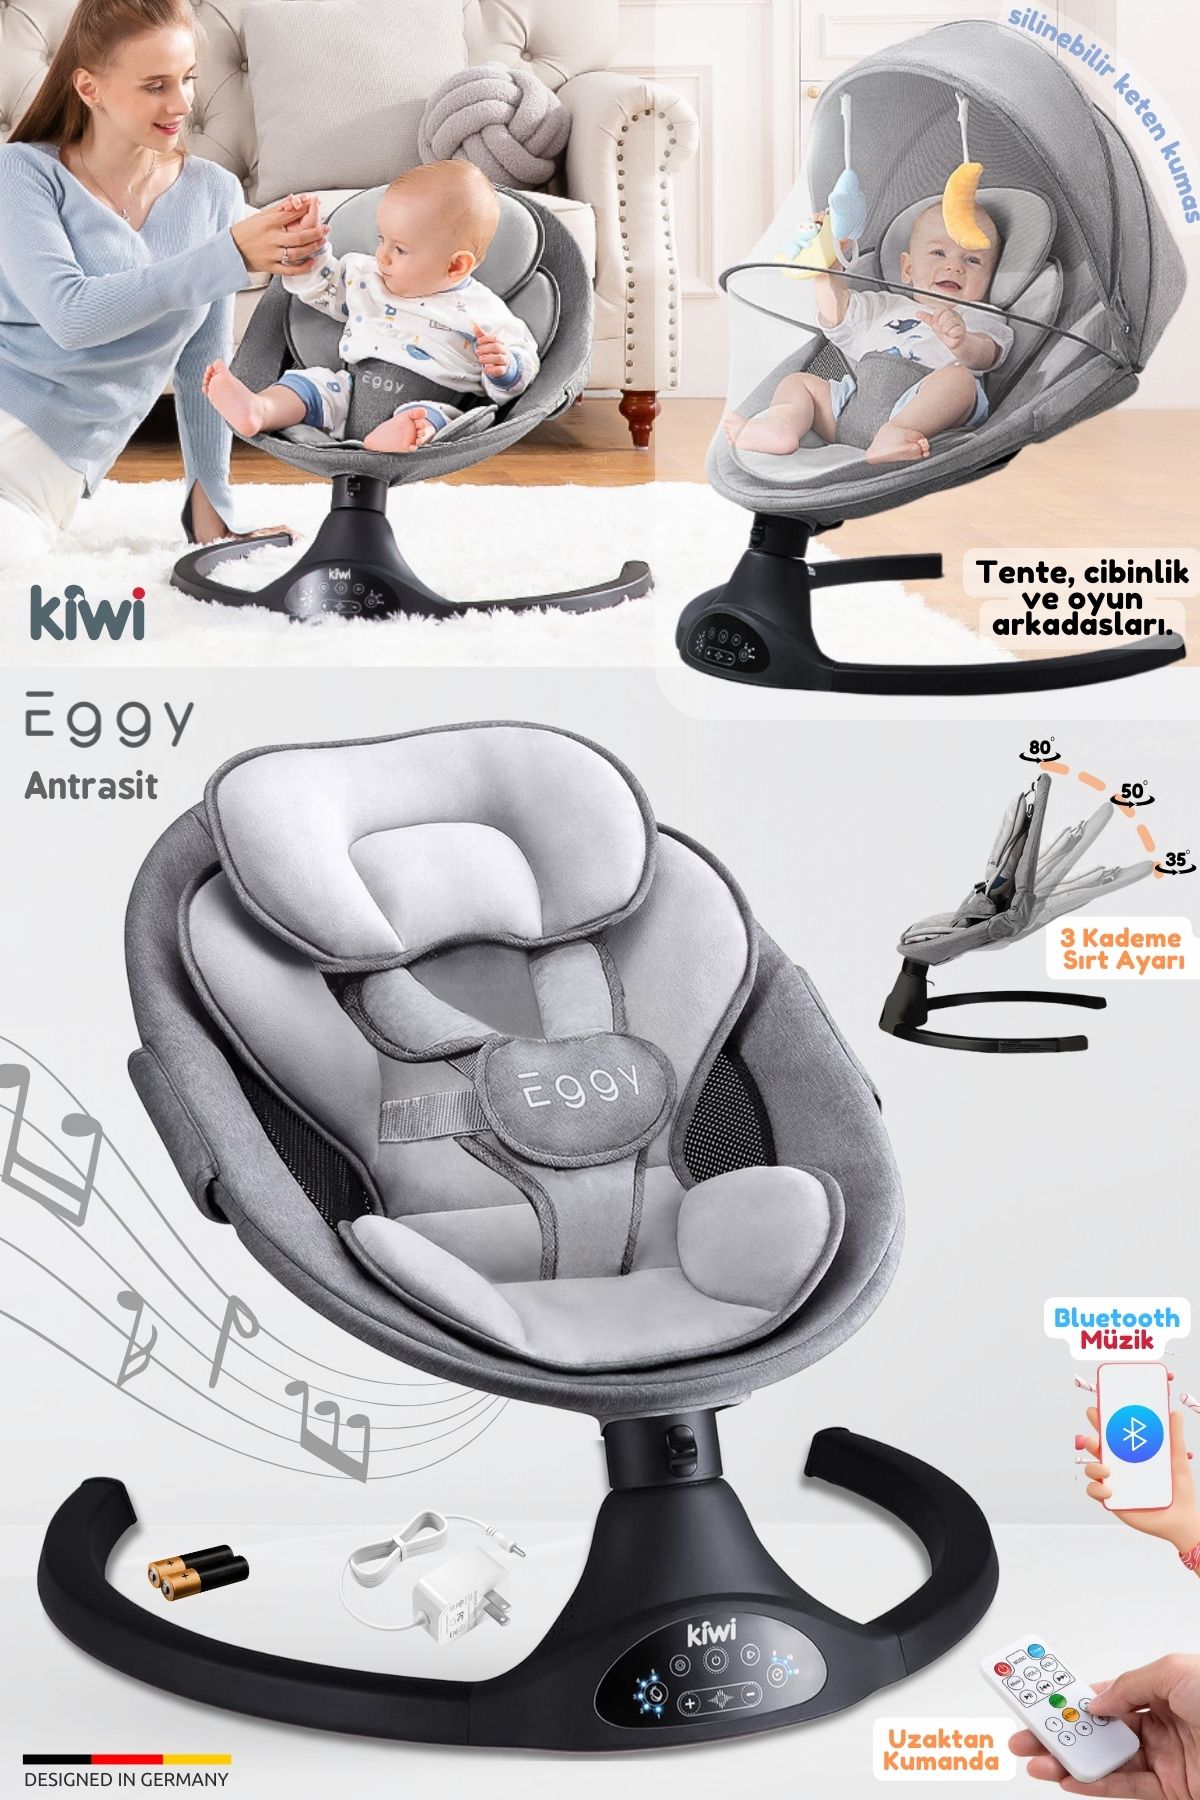 Kiwi Eggy Premium Elektrikli Otomatik Sallanan Ana Kucağı Bluetooth Kumanda Dokunmatik Ekran Konforlu Ped